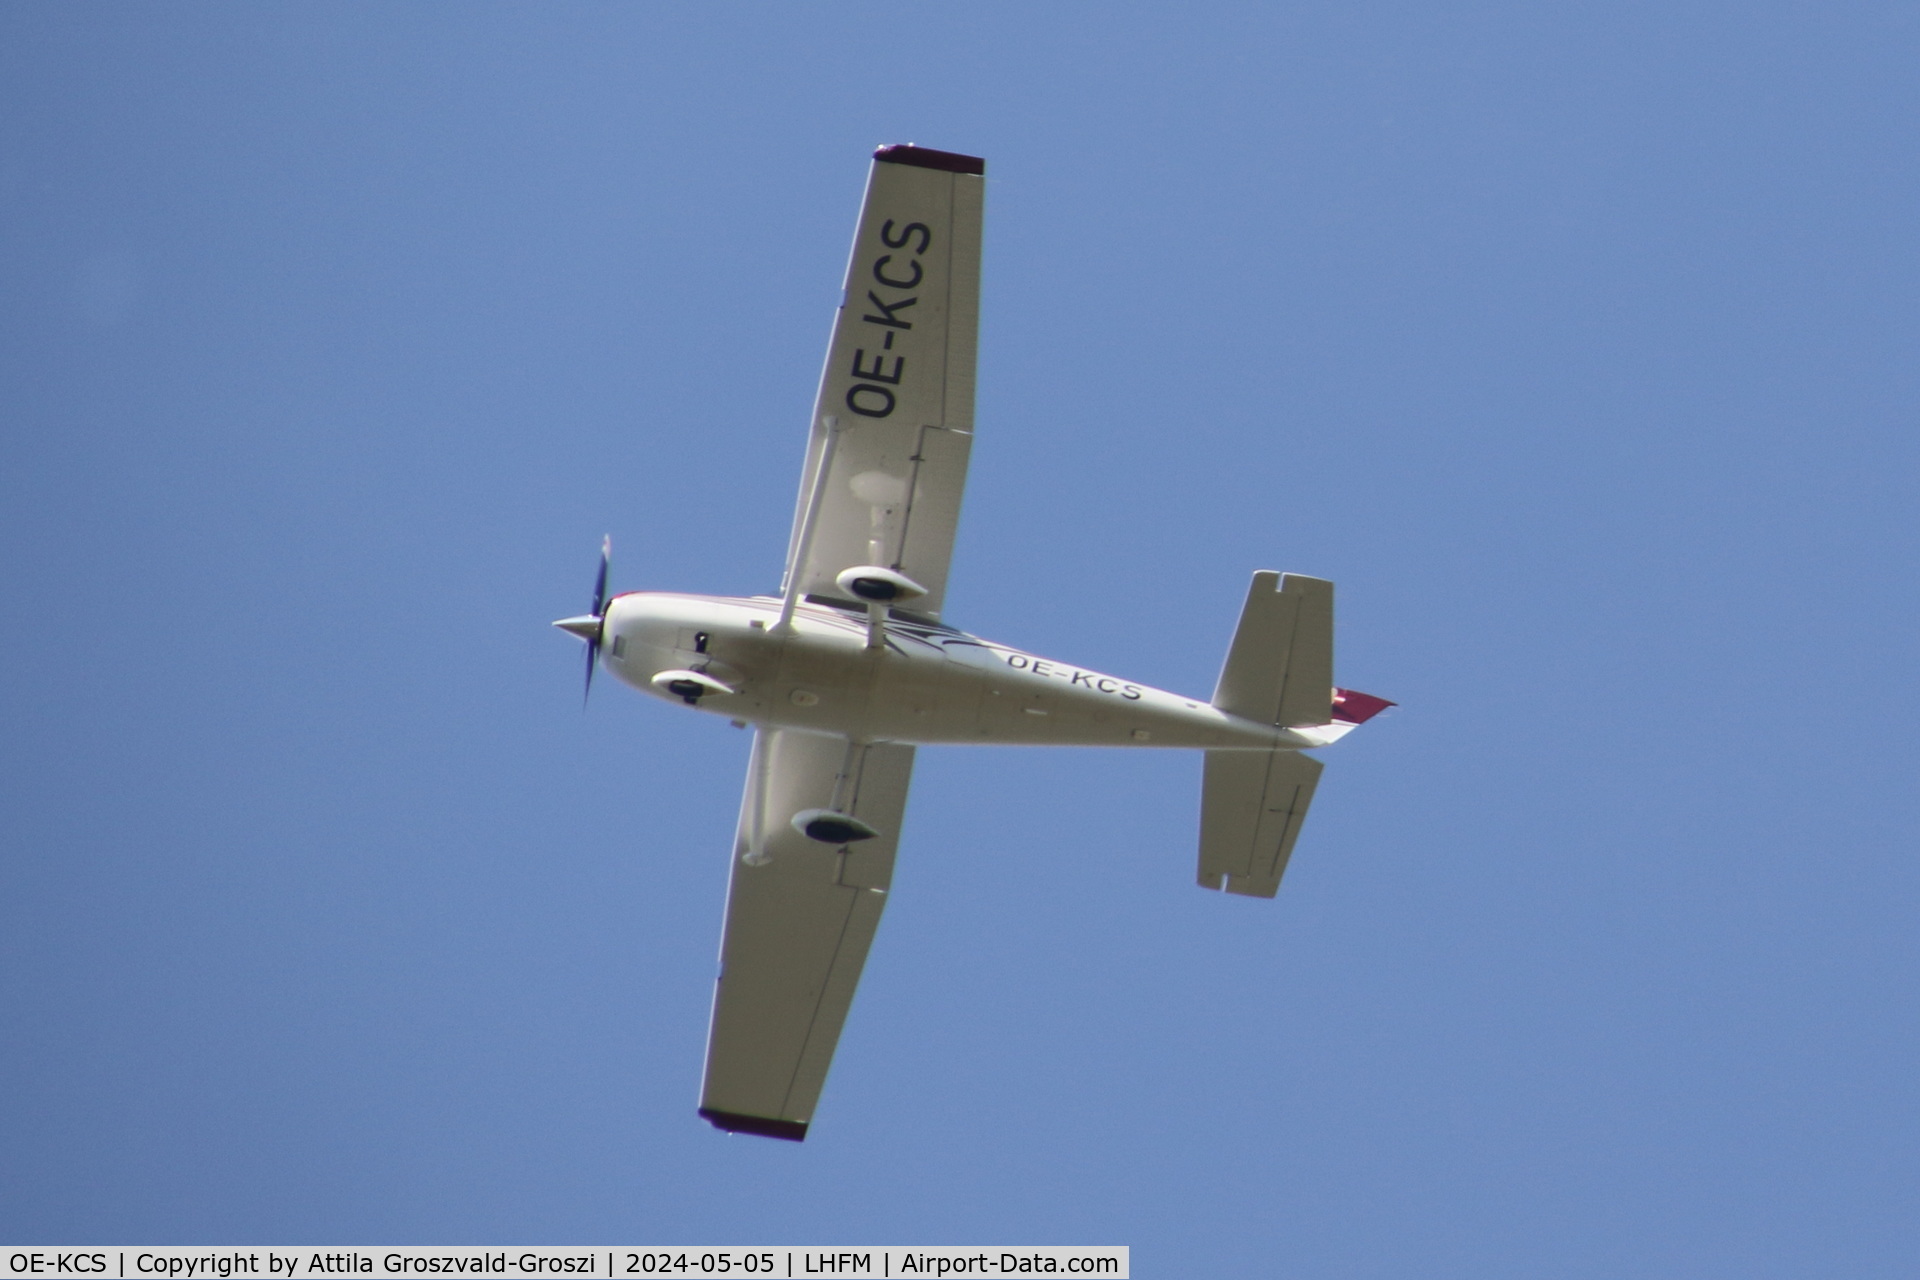 OE-KCS, 2015 Cessna 182T Skylane Skylane C/N 18282386, LHFM - Meidl Airport, Fertoszentmiklós, Hungary